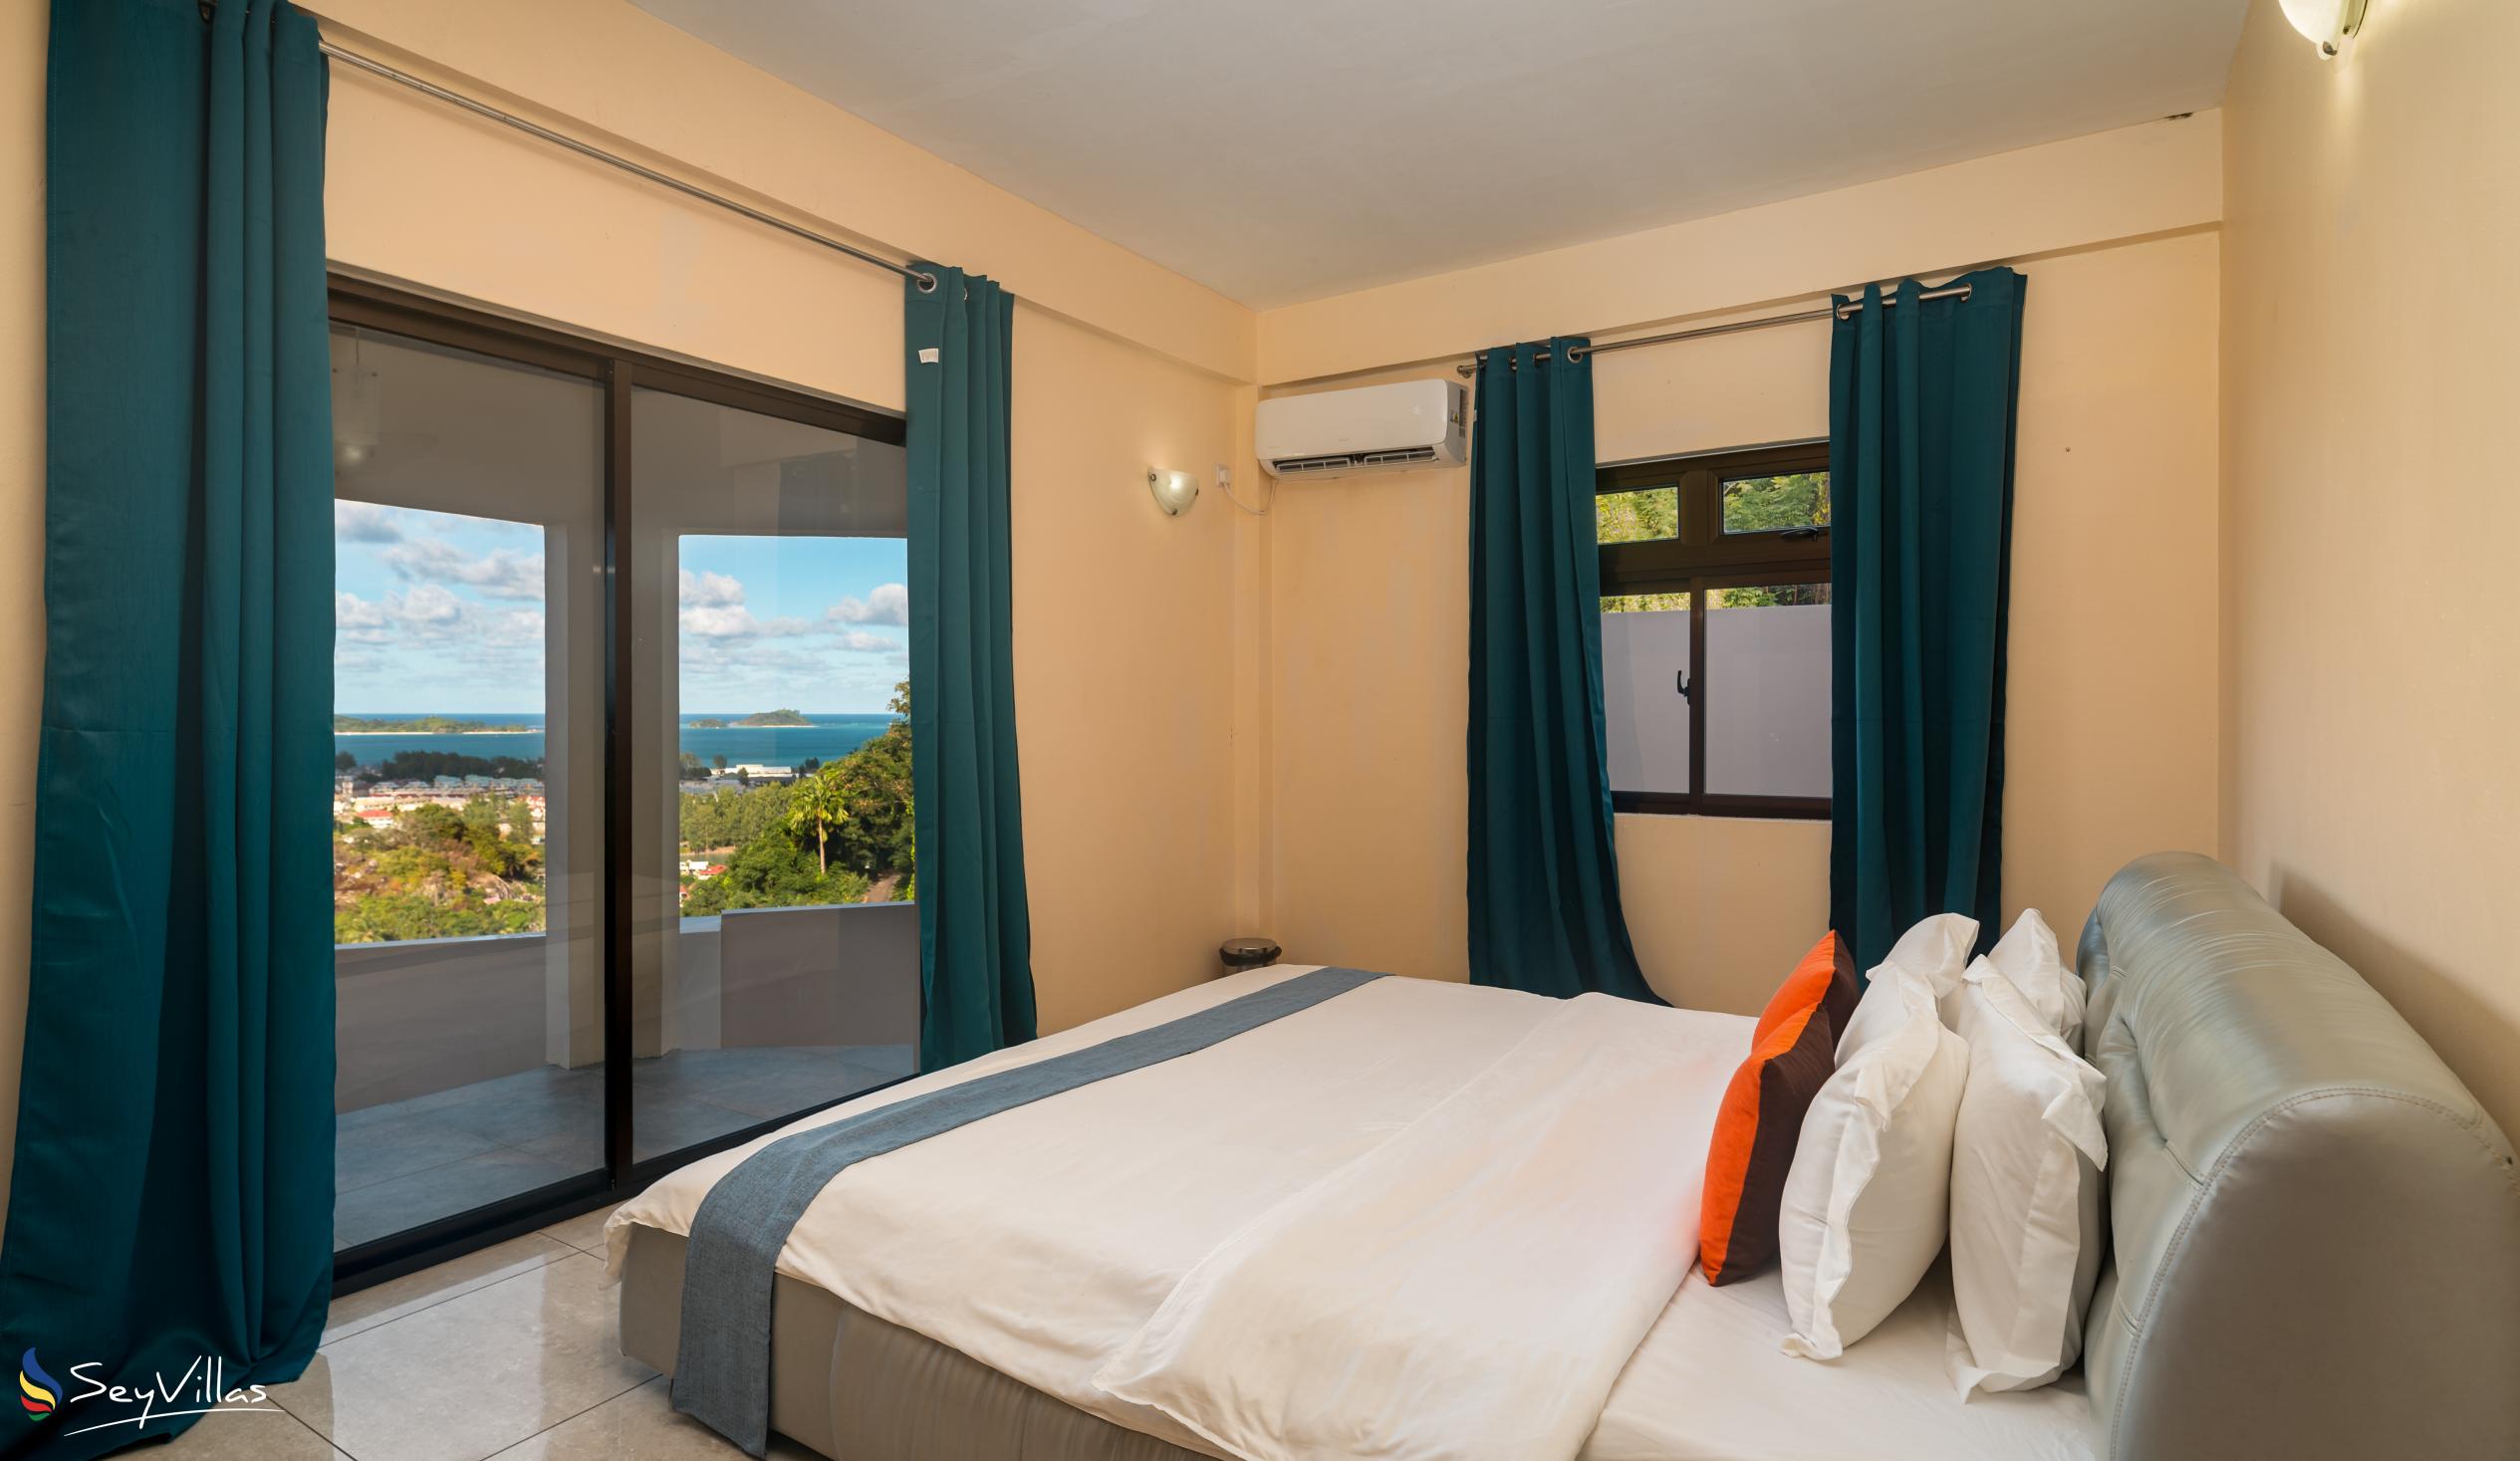 Photo 70: Maison L'Horizon - 2-Bedroom Apartment Vann Nor - Mahé (Seychelles)